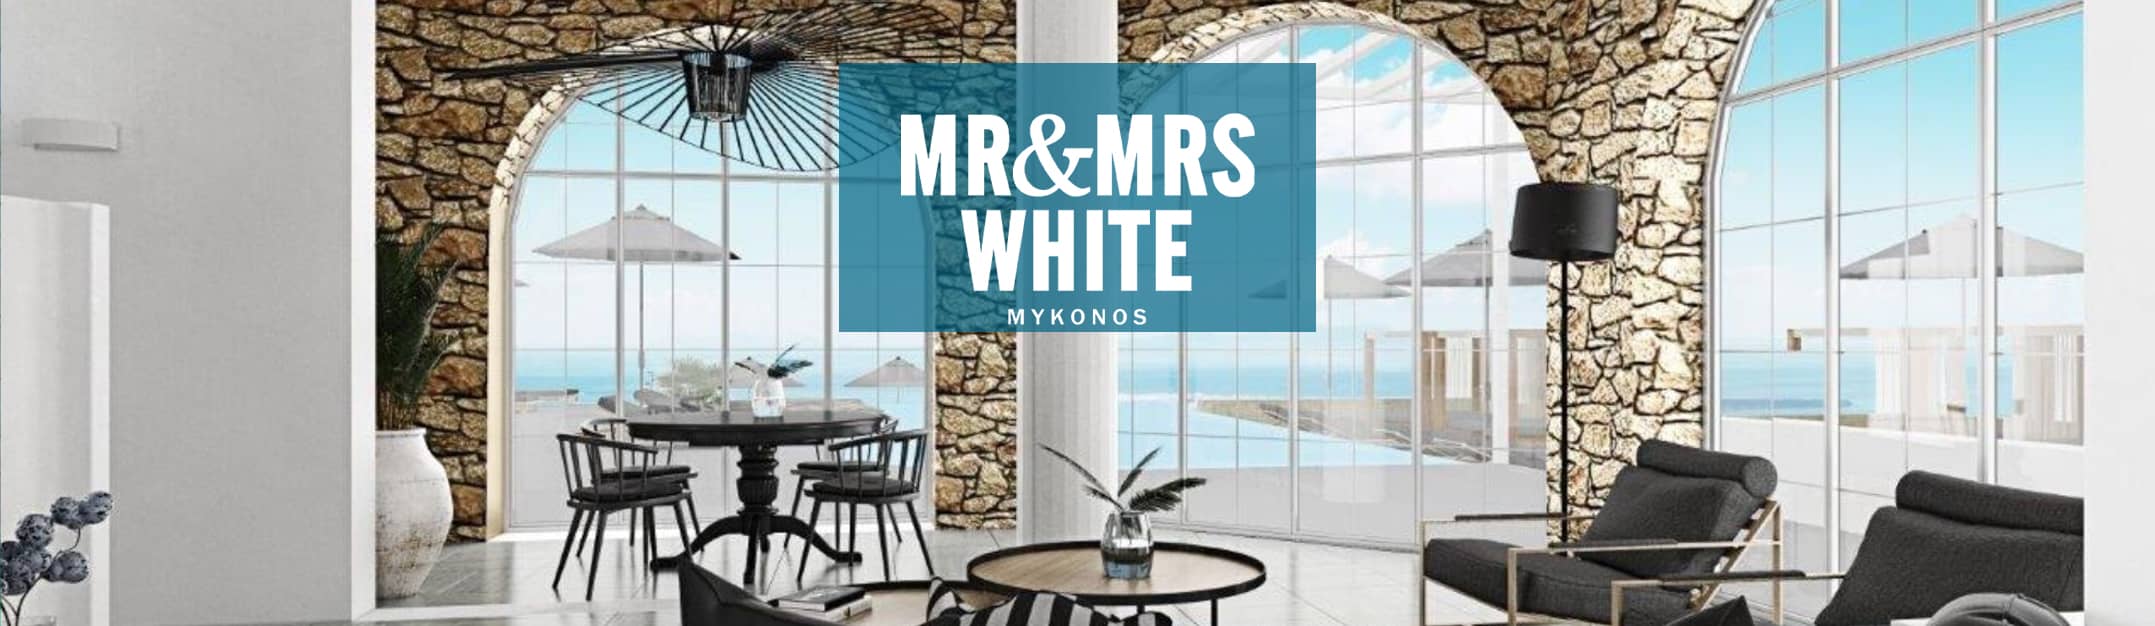 Mr & Mrs White Mikonos